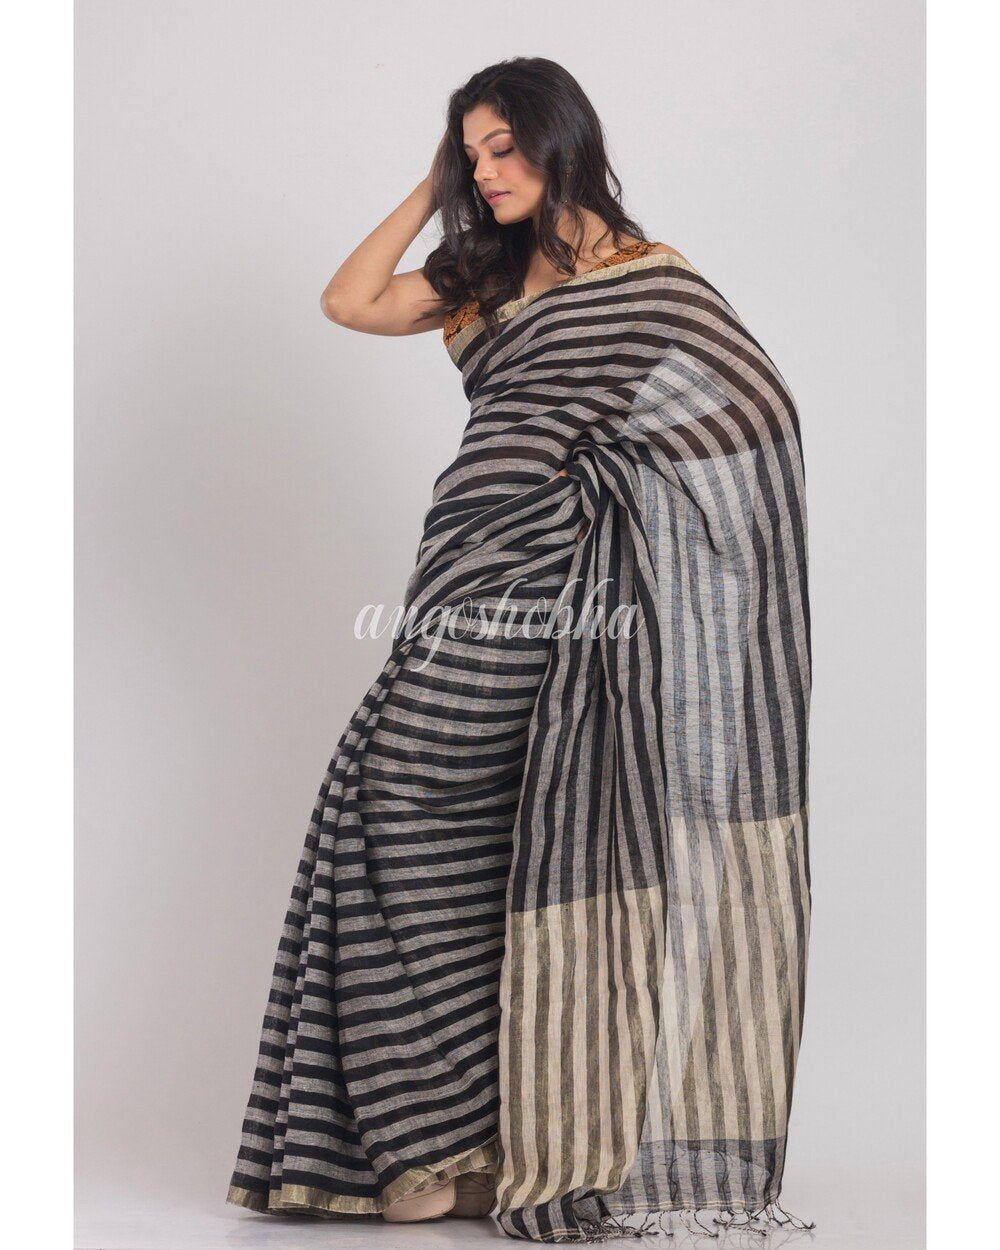 Women's Grey Handwoven Linen Saree - Angoshobha